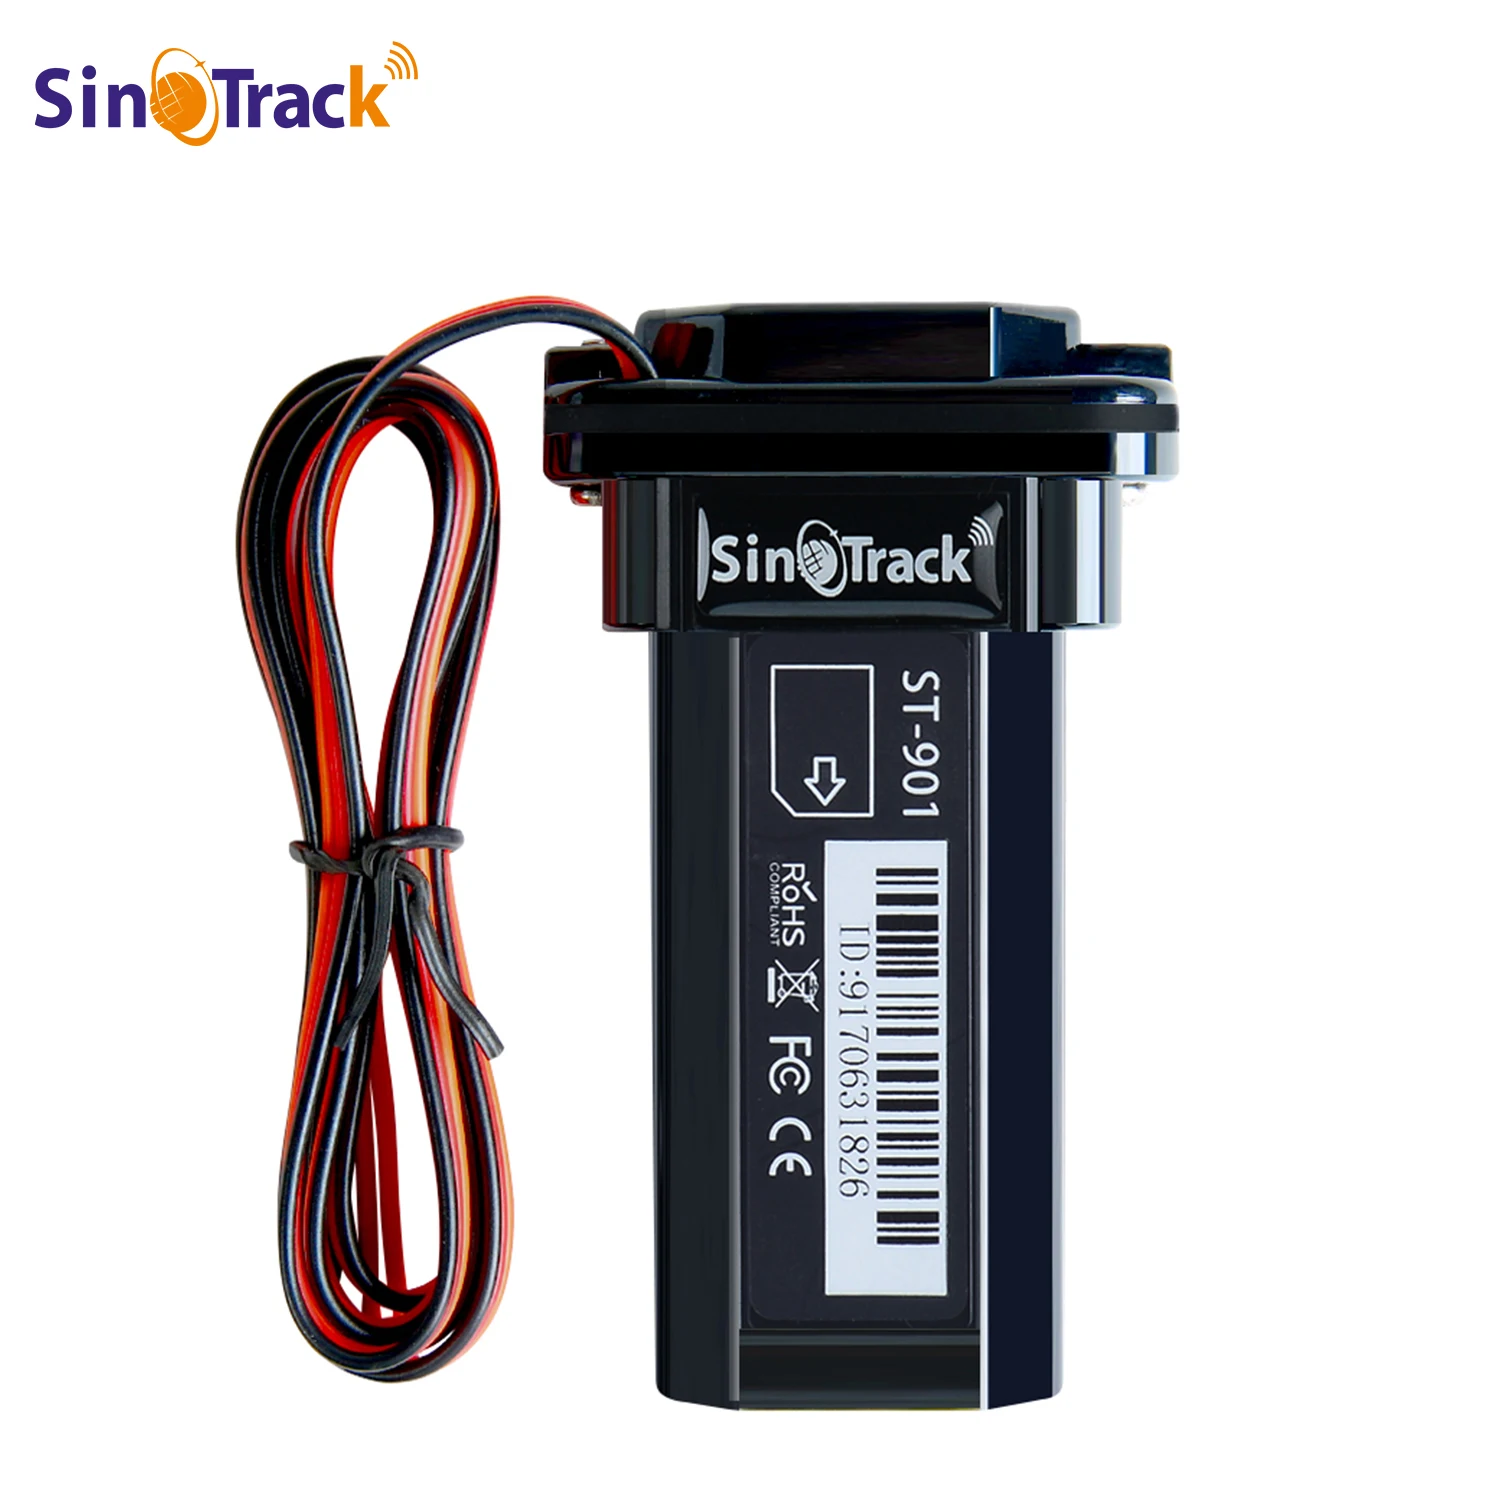 SinoTrack GPS Tracker ST-901 Vehicle Tracking Device Waterproof motorcyc... - $29.22+